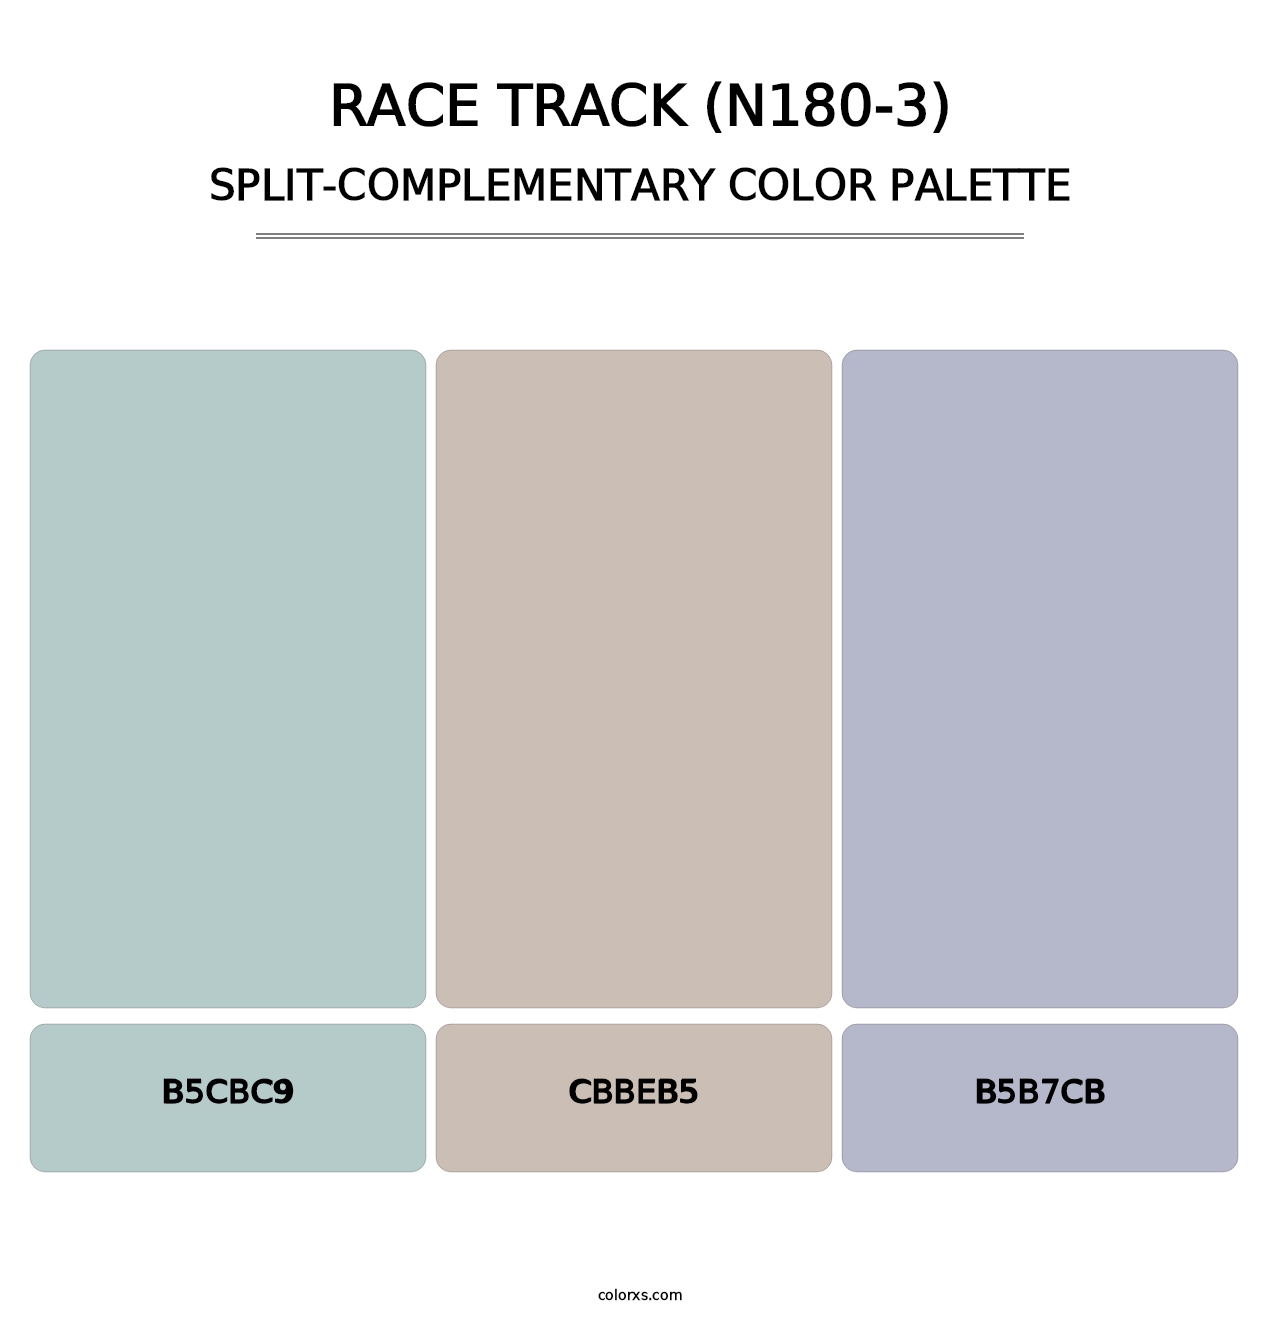 Race Track (N180-3) - Split-Complementary Color Palette